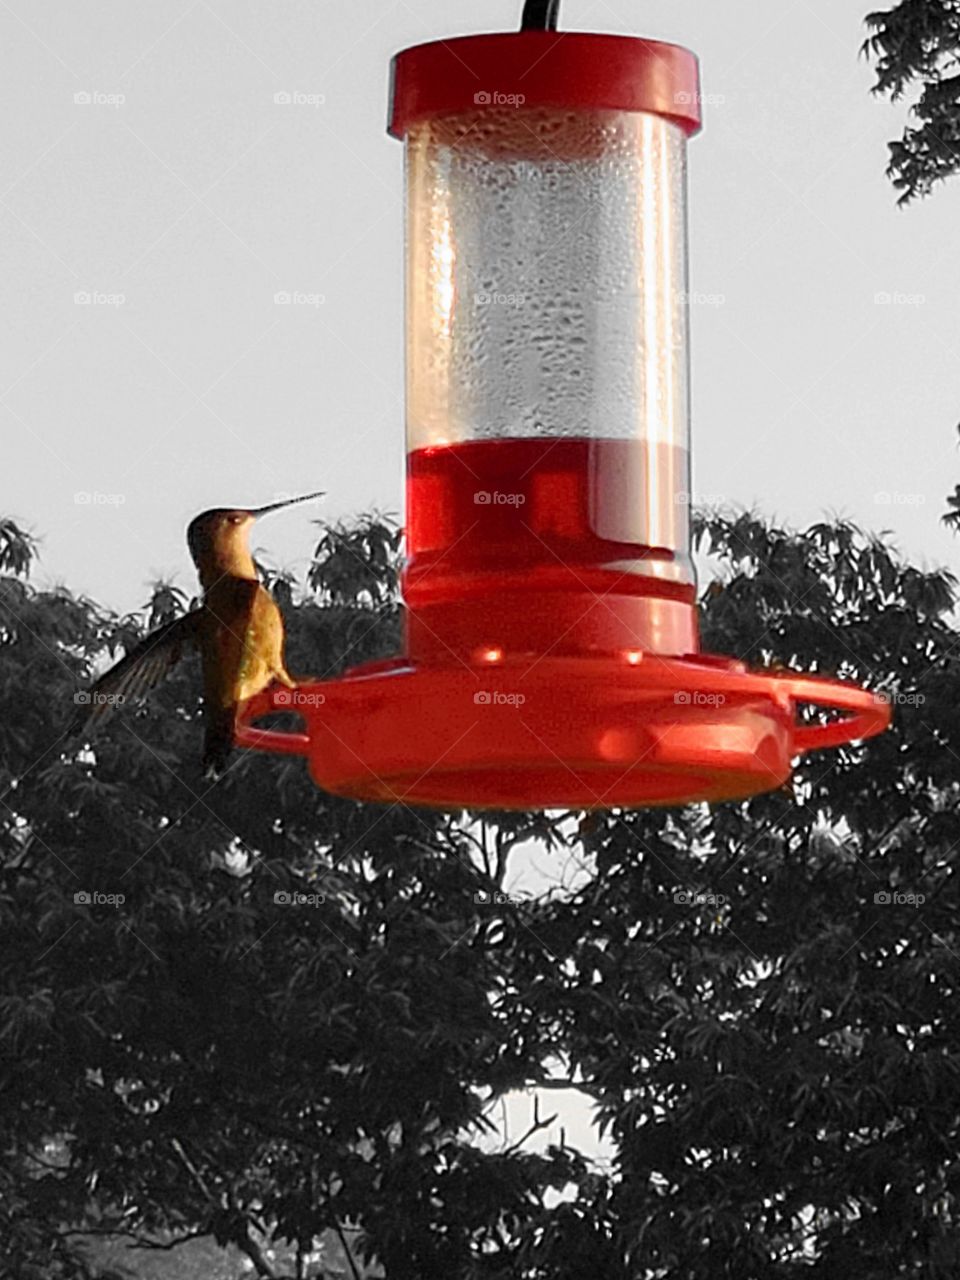 hummingbird on feeder